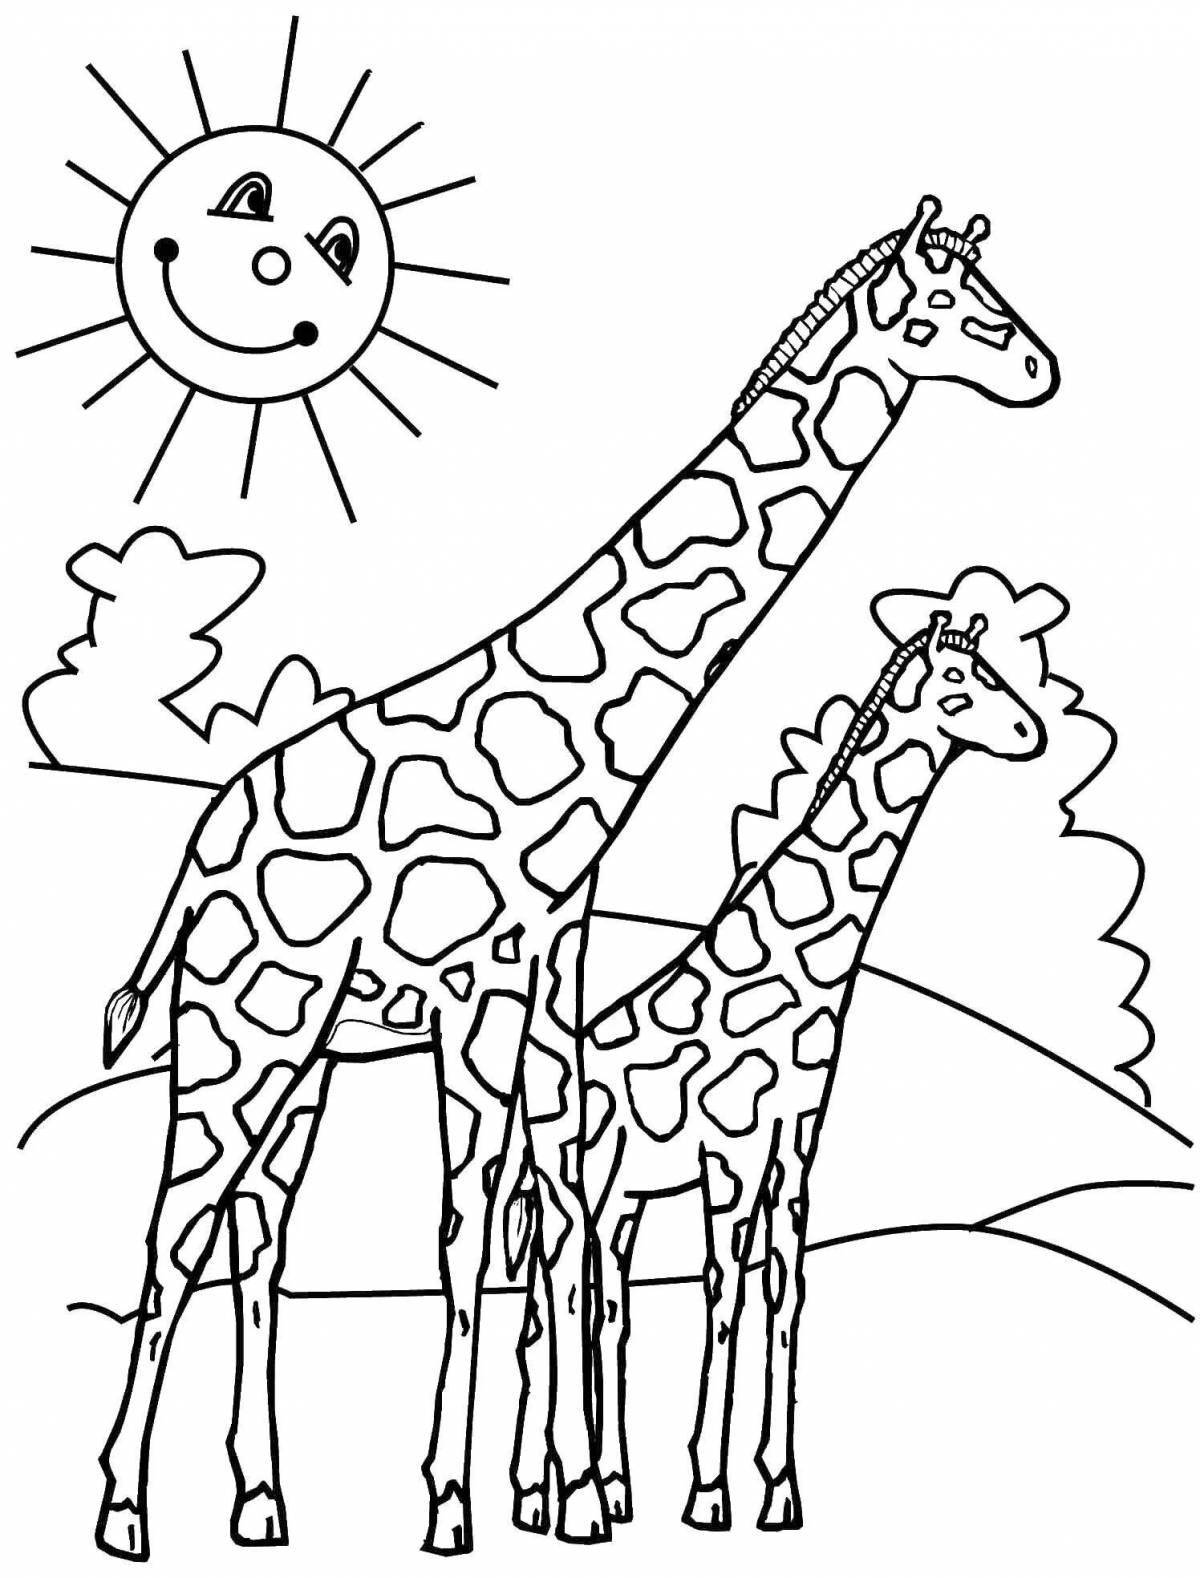 Cute giraffe coloring book